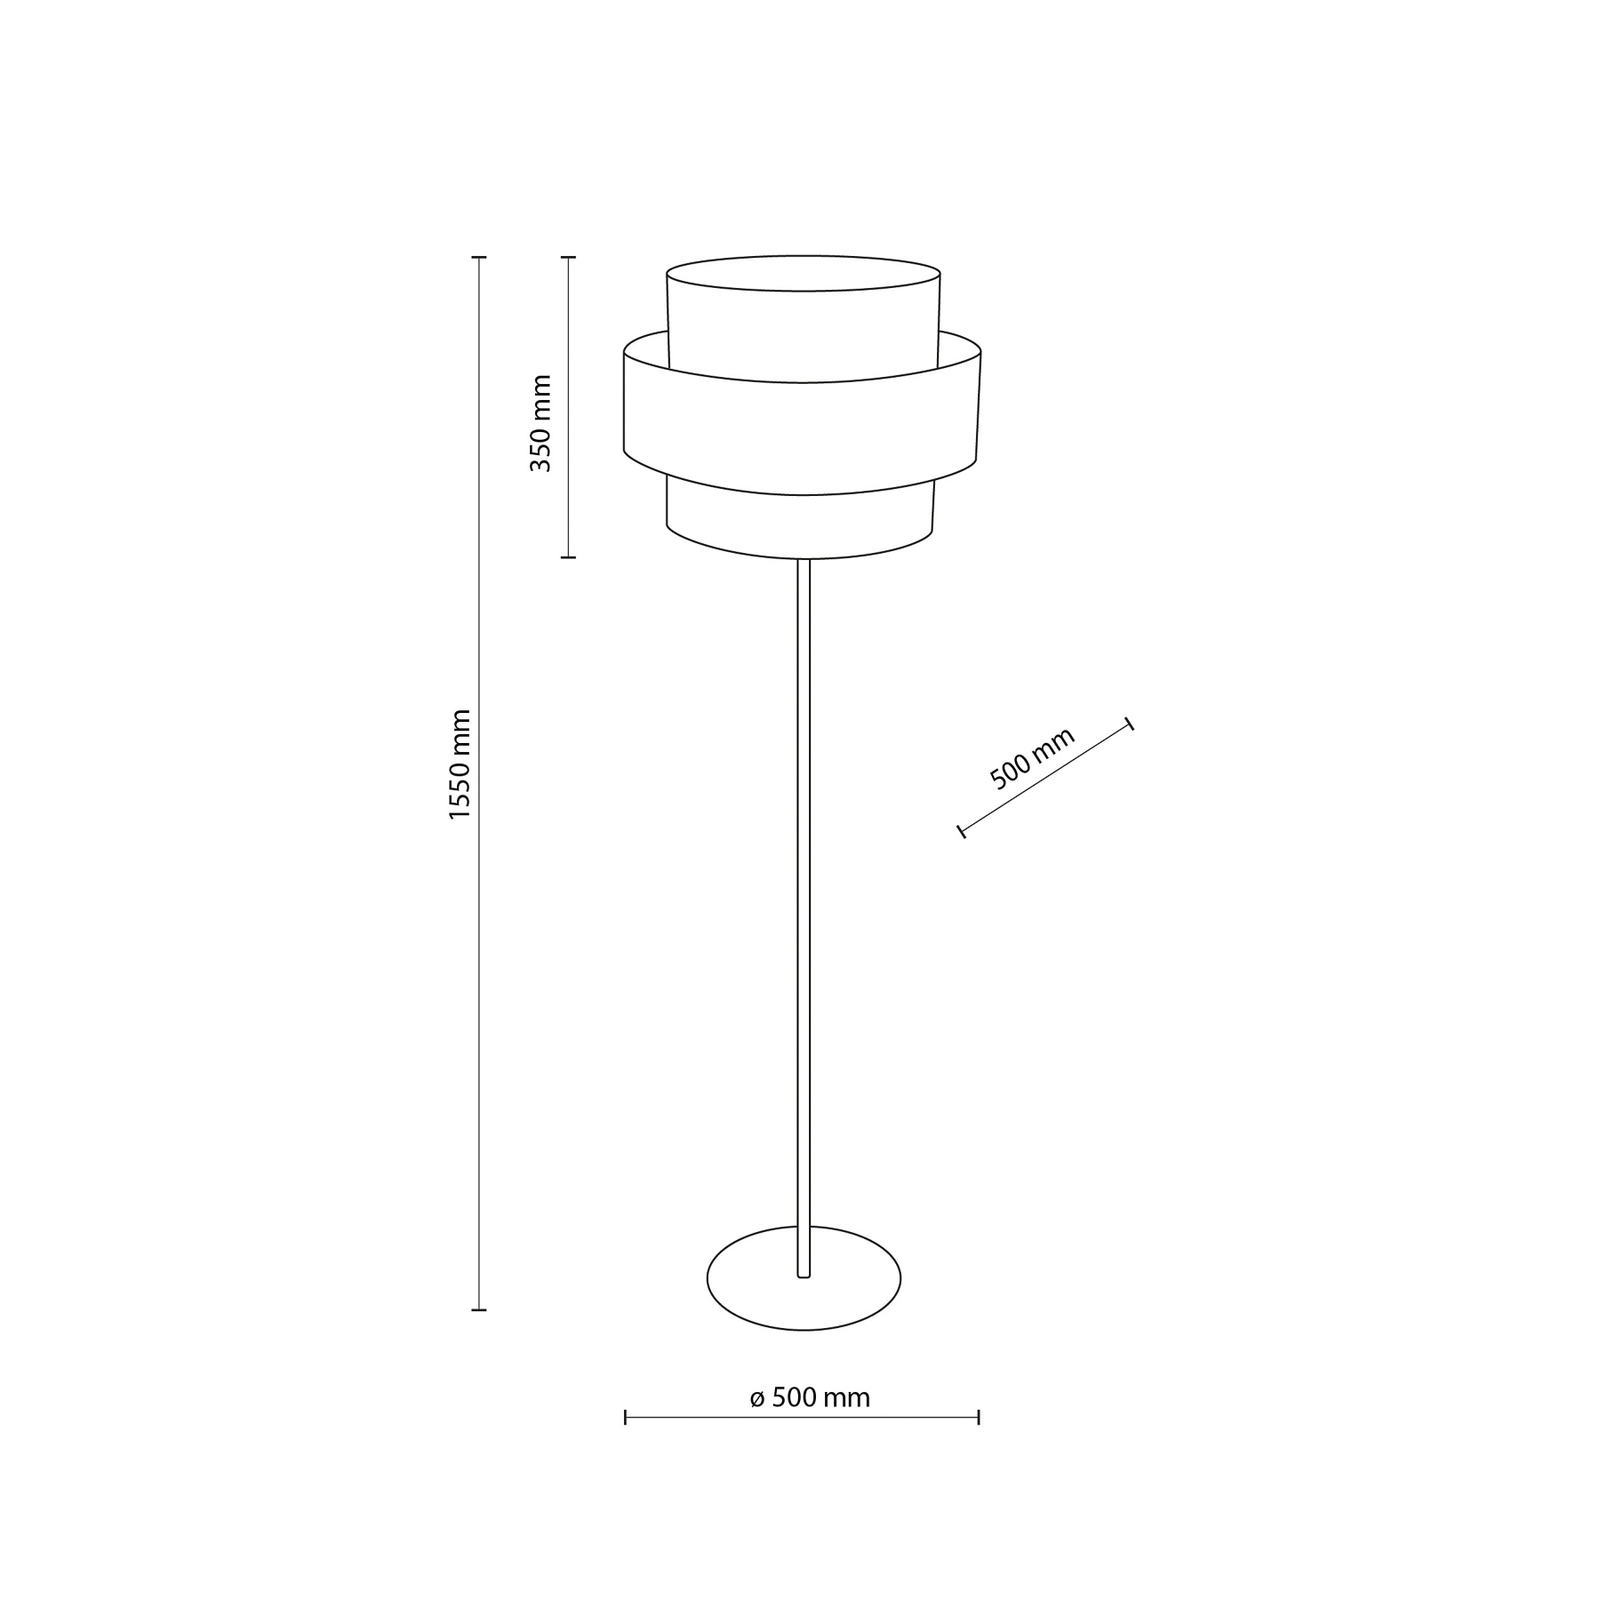 Calisto vloerlamp, jute, cilinder, naturel bruin, hoogte 155 cm